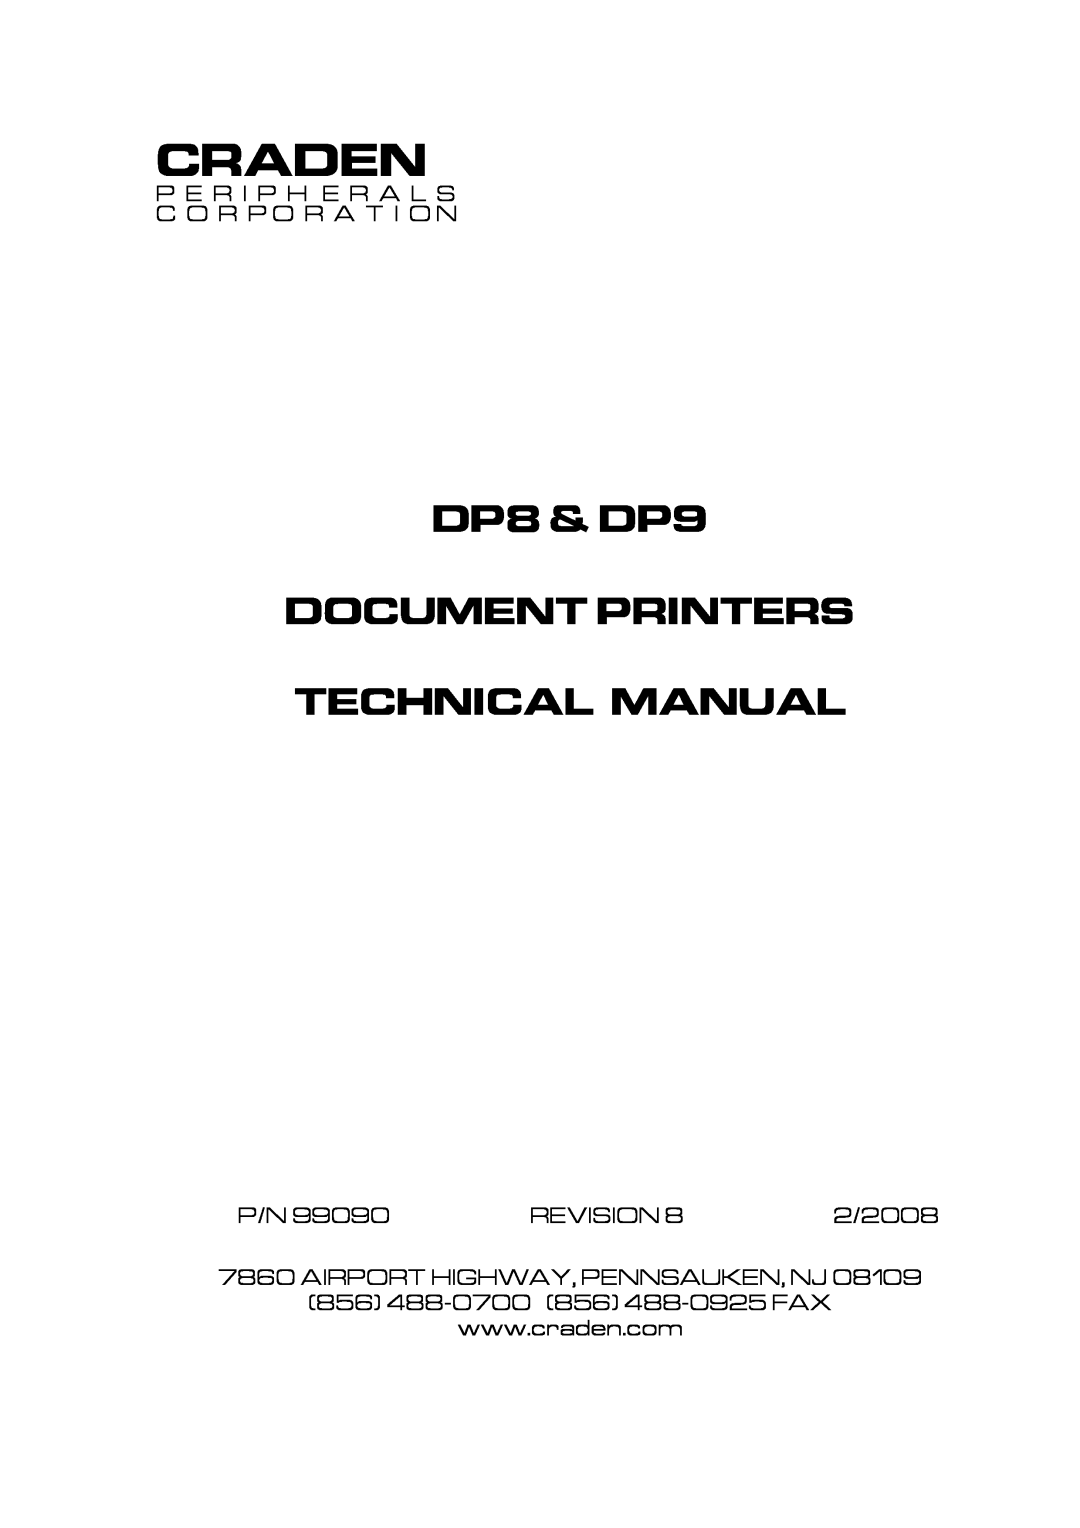 Craden Peripherals technical manual Craden, DP8 & DP9 DOCUMENT PRINTERS TECHNICAL MANUAL 